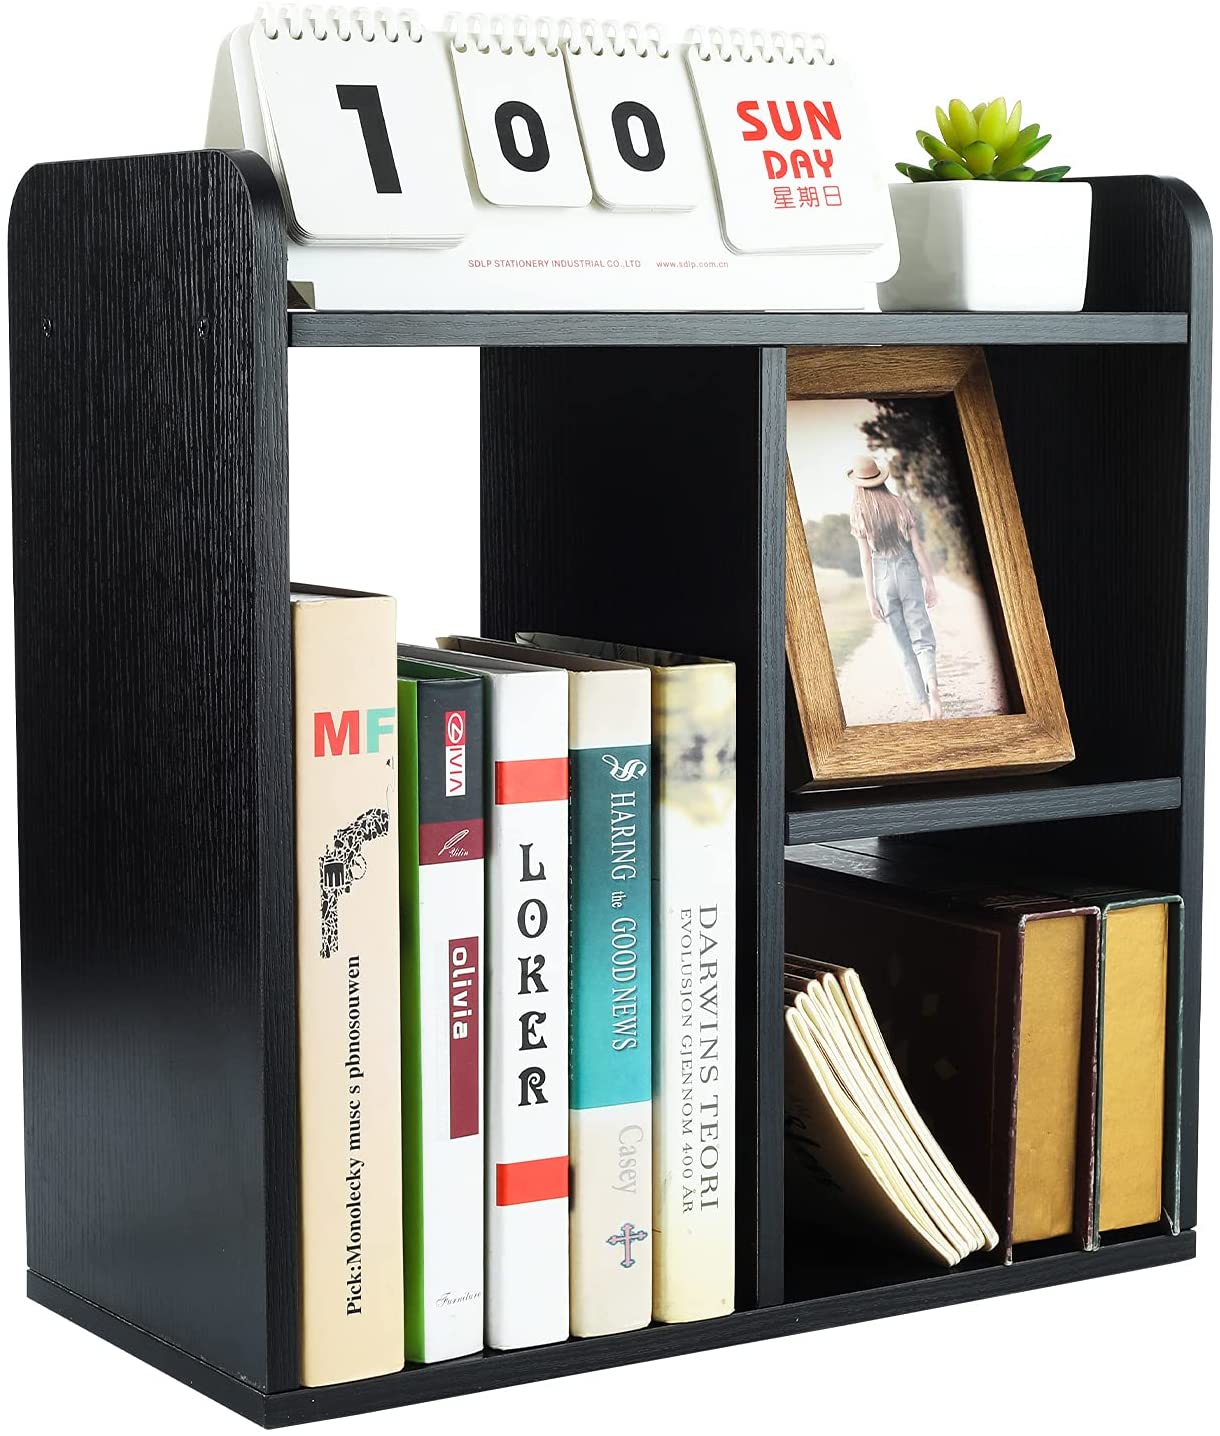 Small bookshelf for decor and book organization